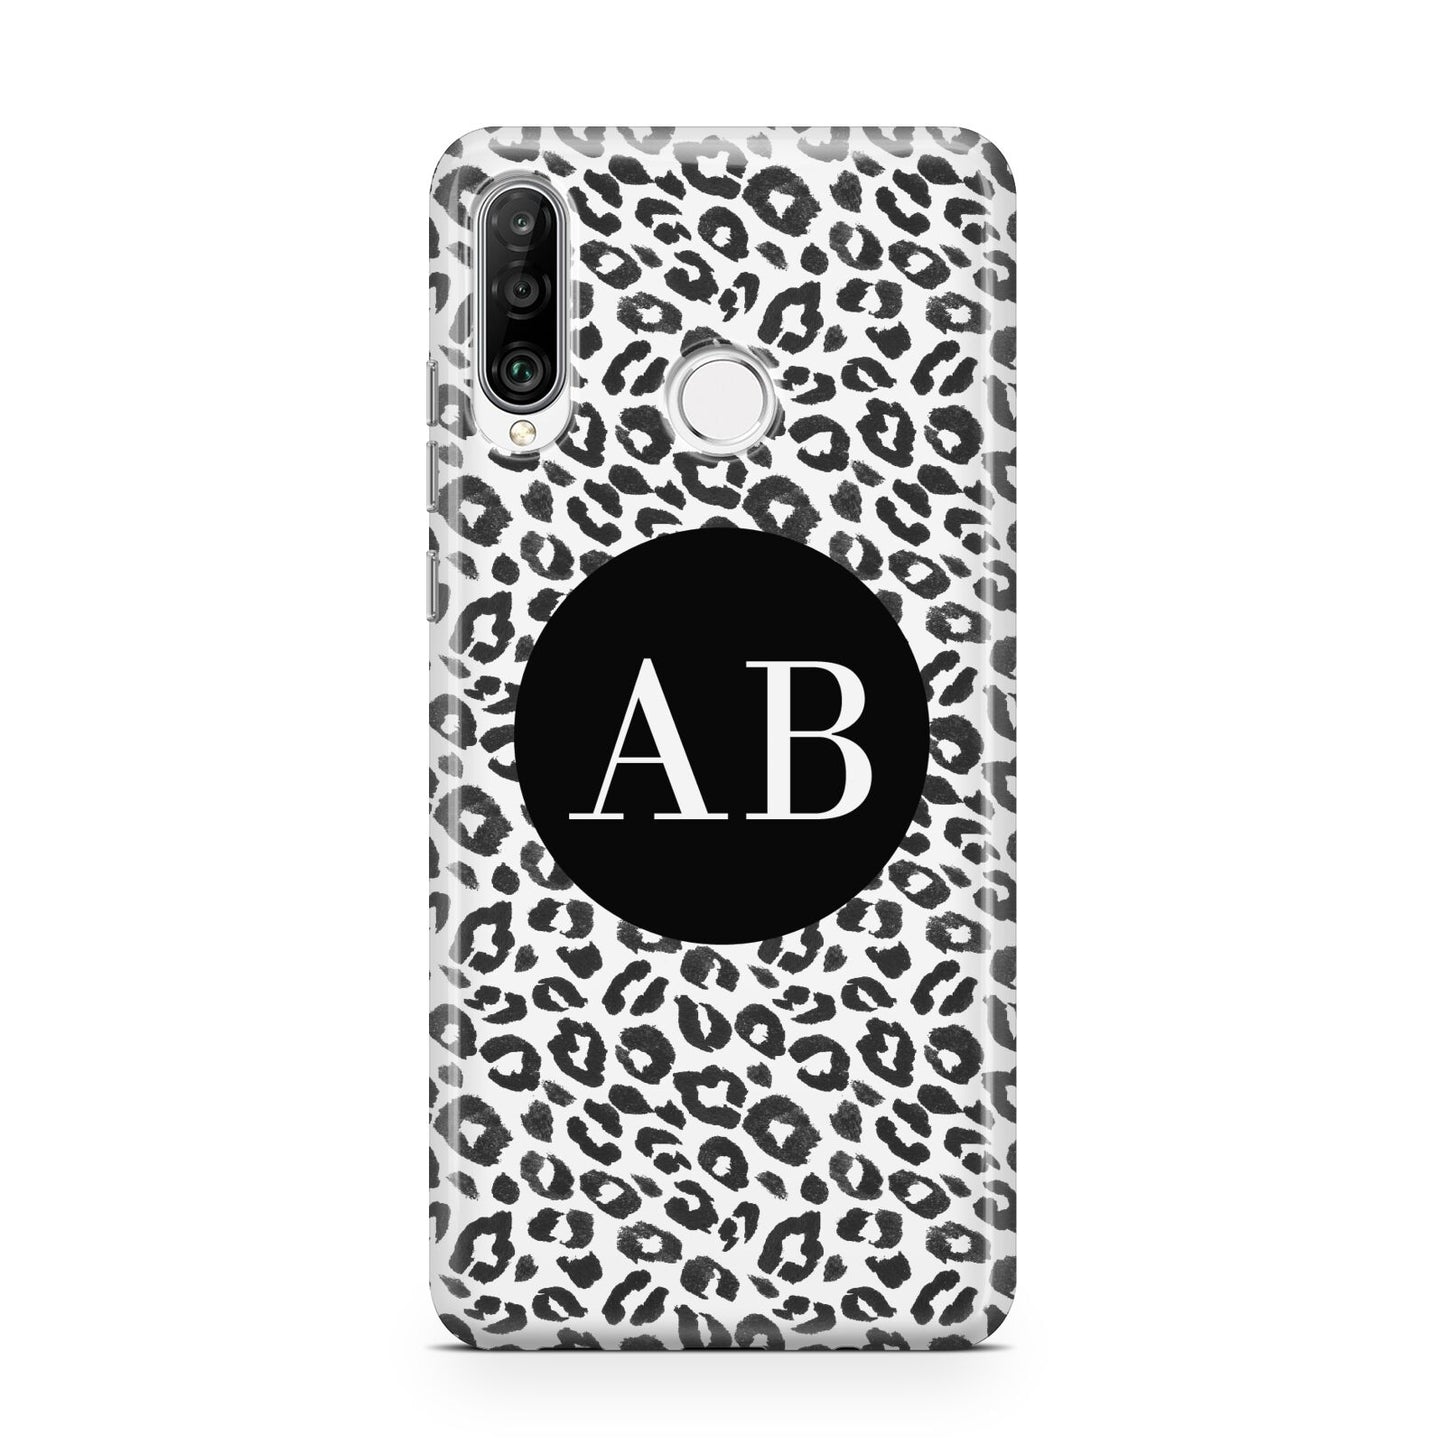 Leopard Print Black and White Huawei P30 Lite Phone Case